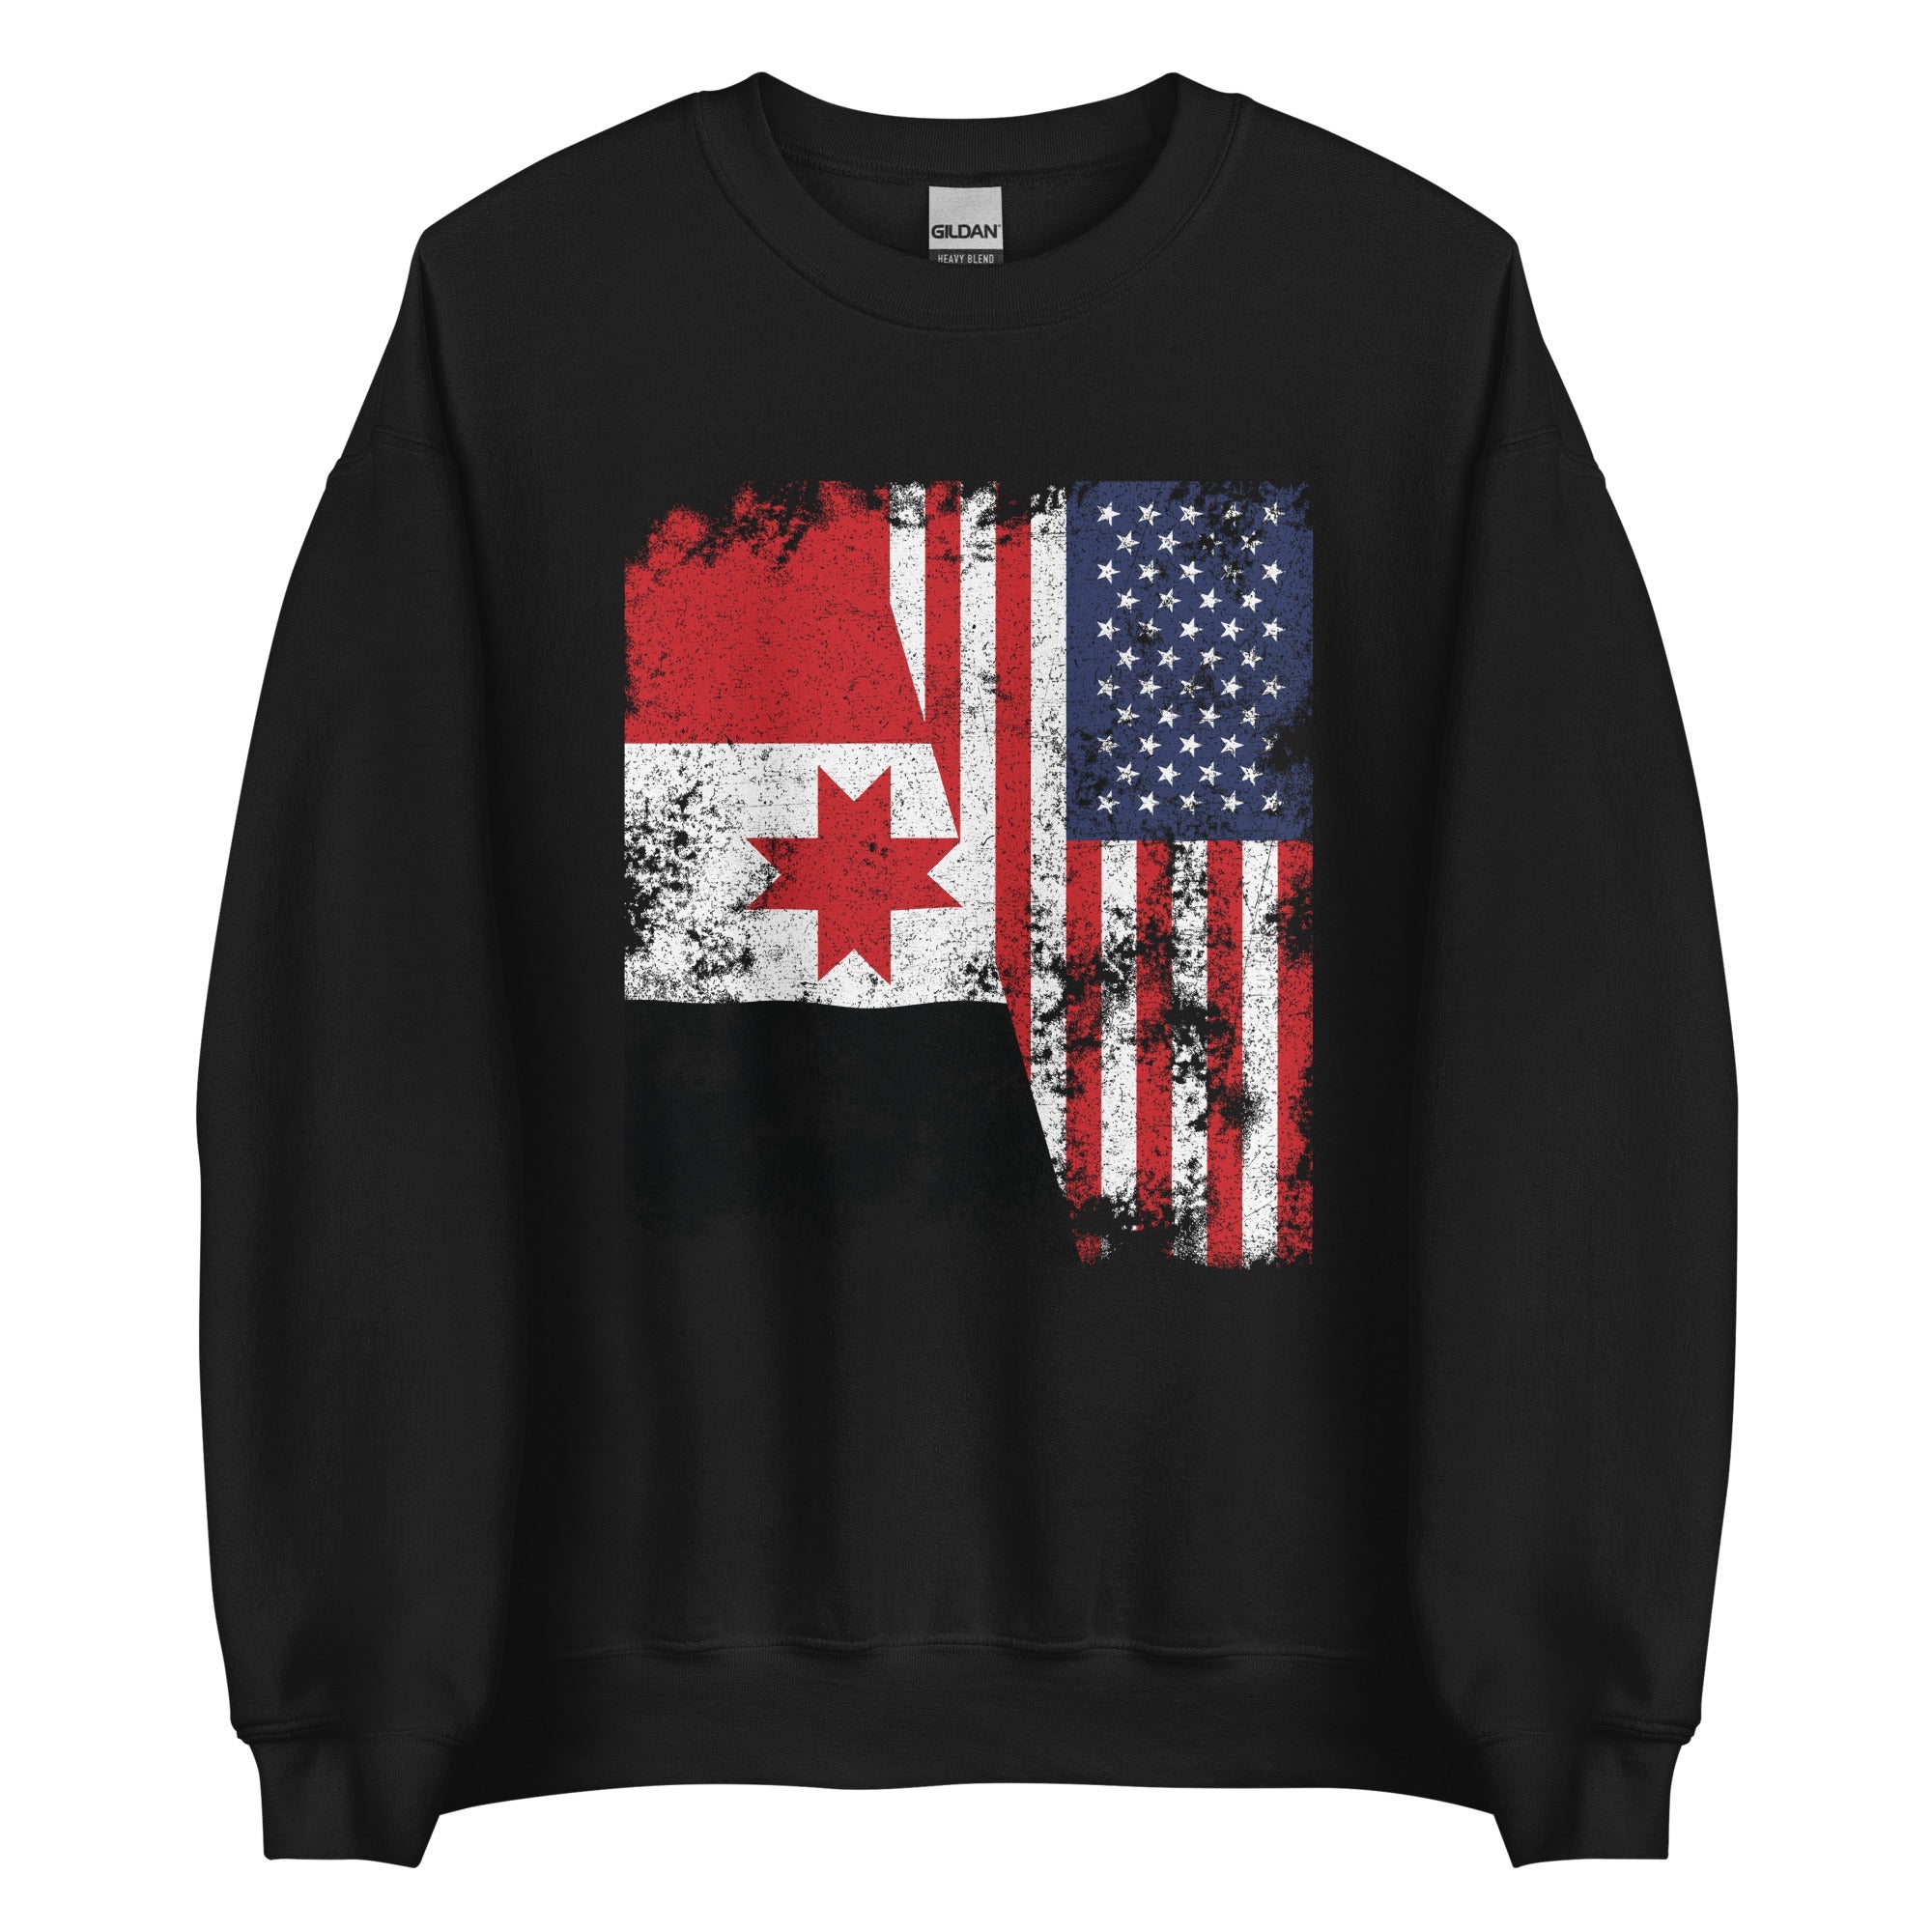 Udmurtia USA Flag - Half American Sweatshirt